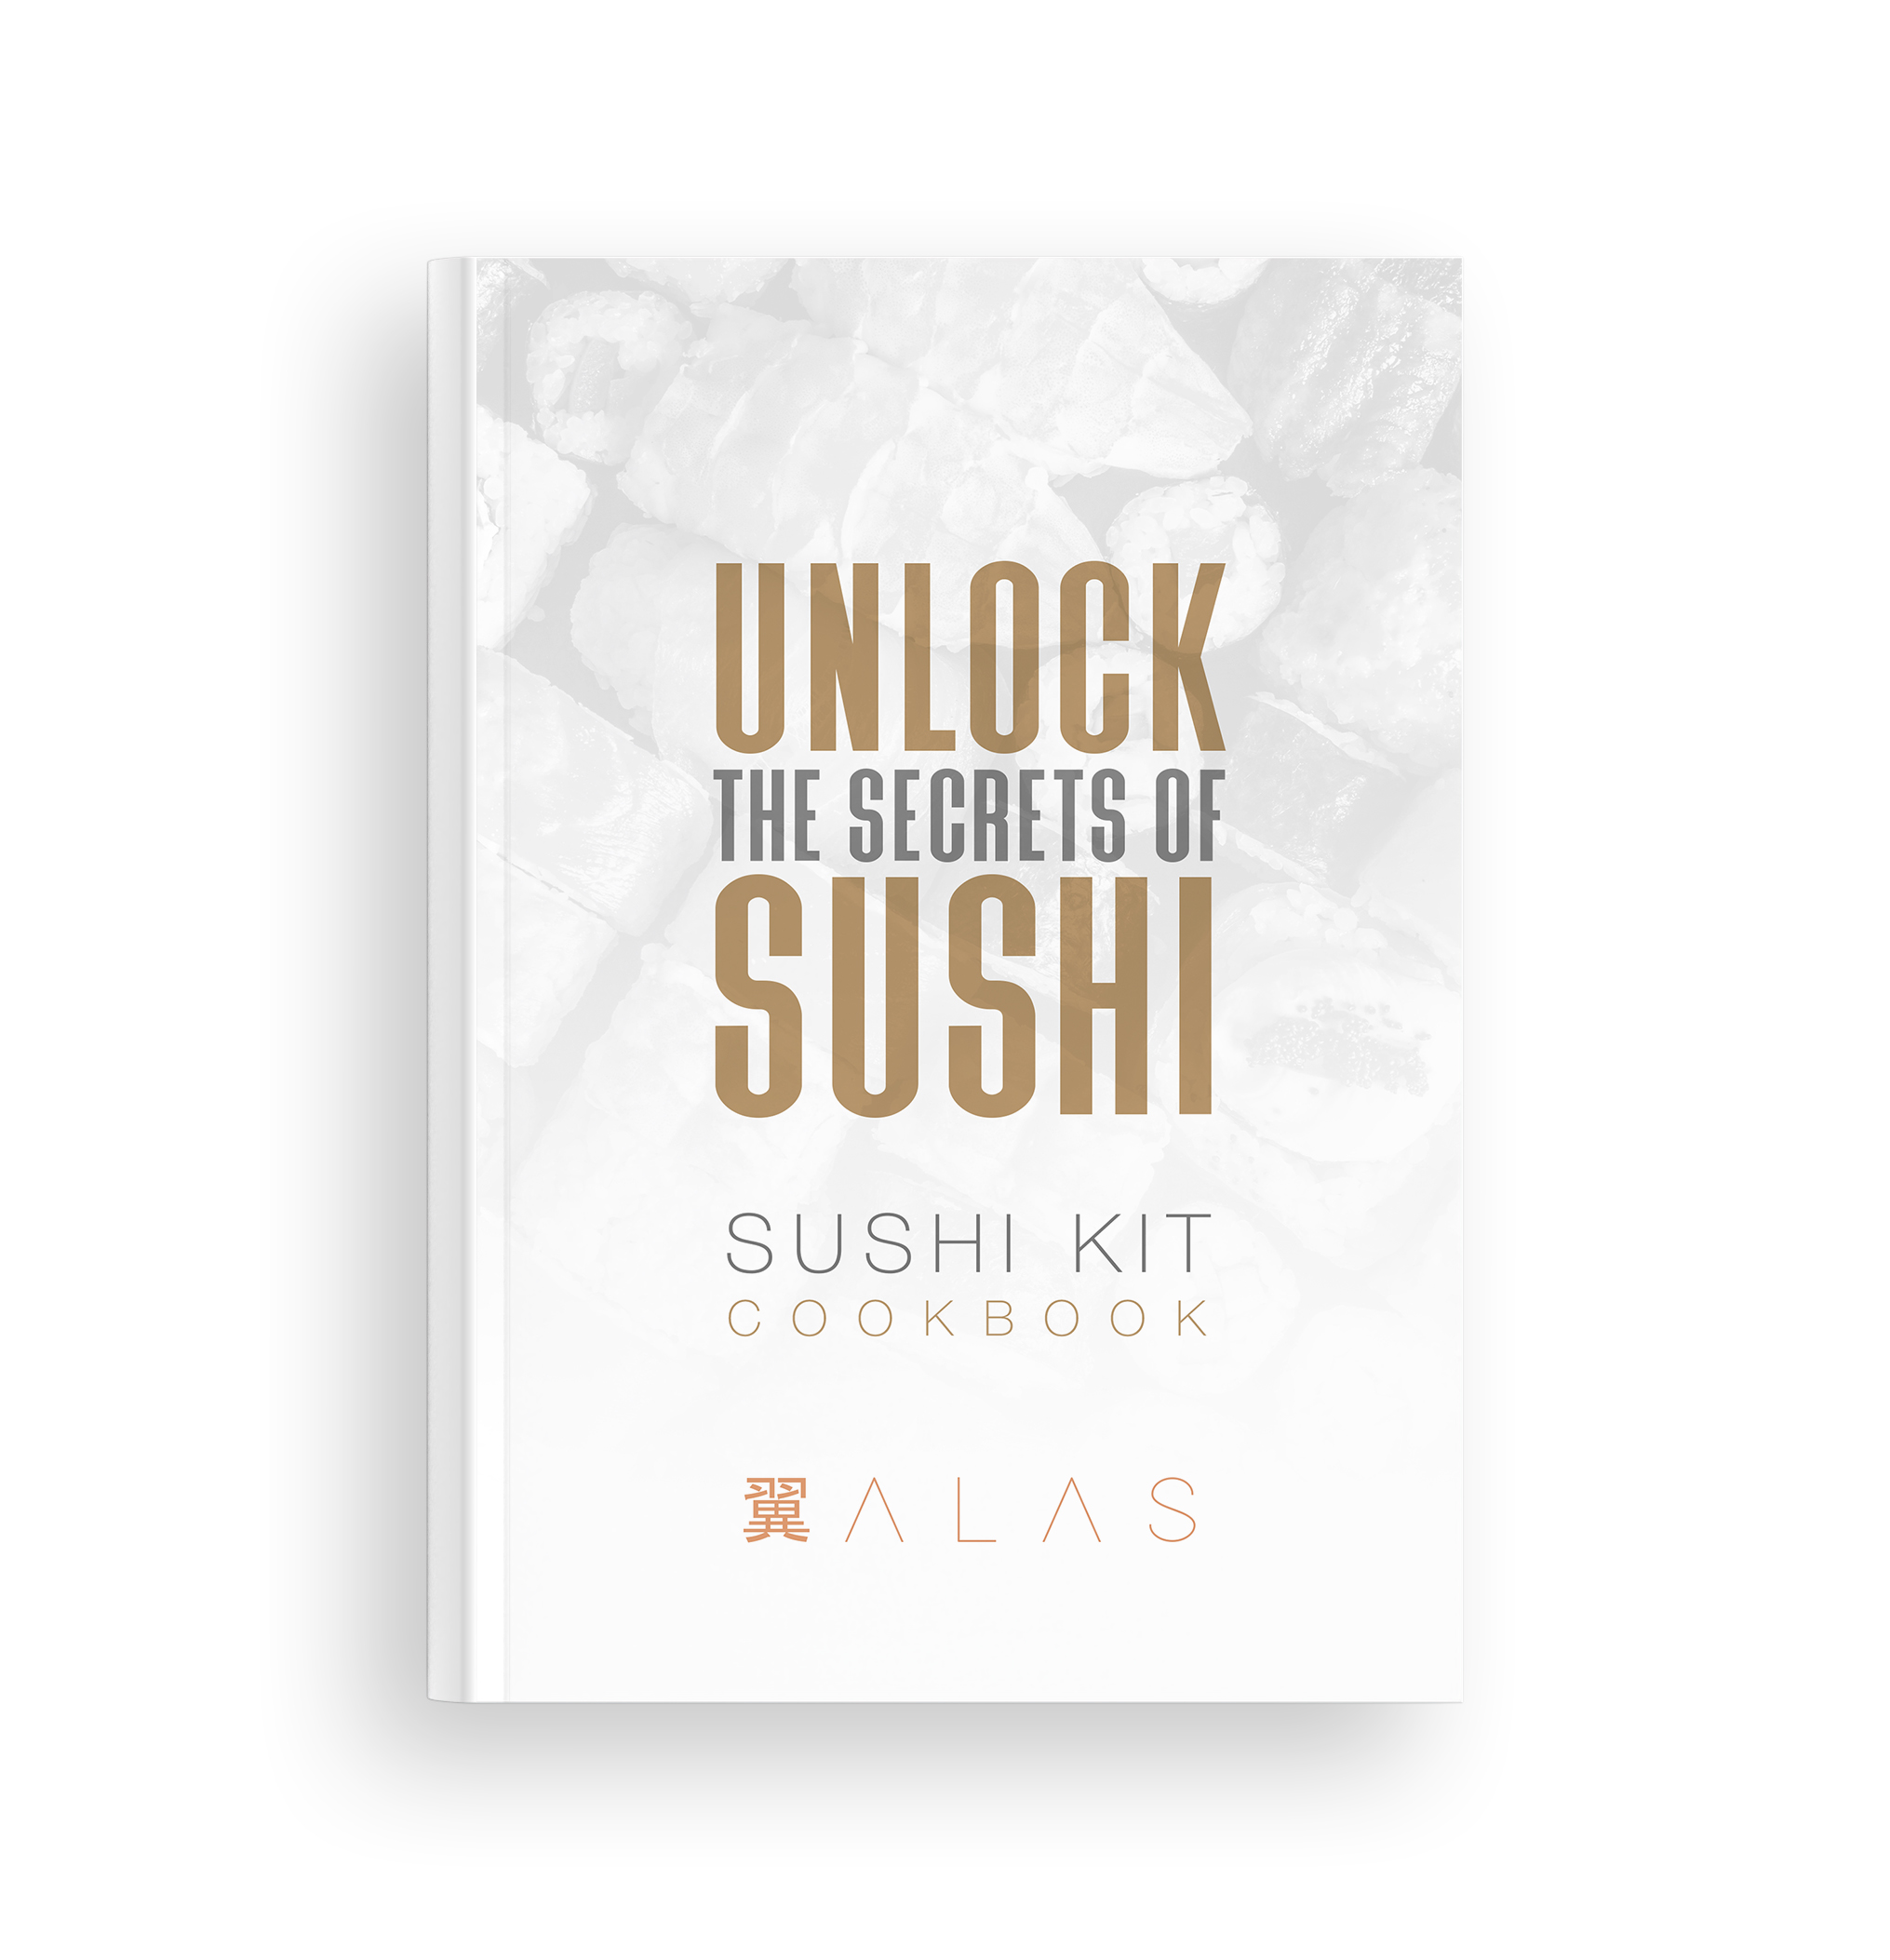 How To Alas Suhi Making Kit. 